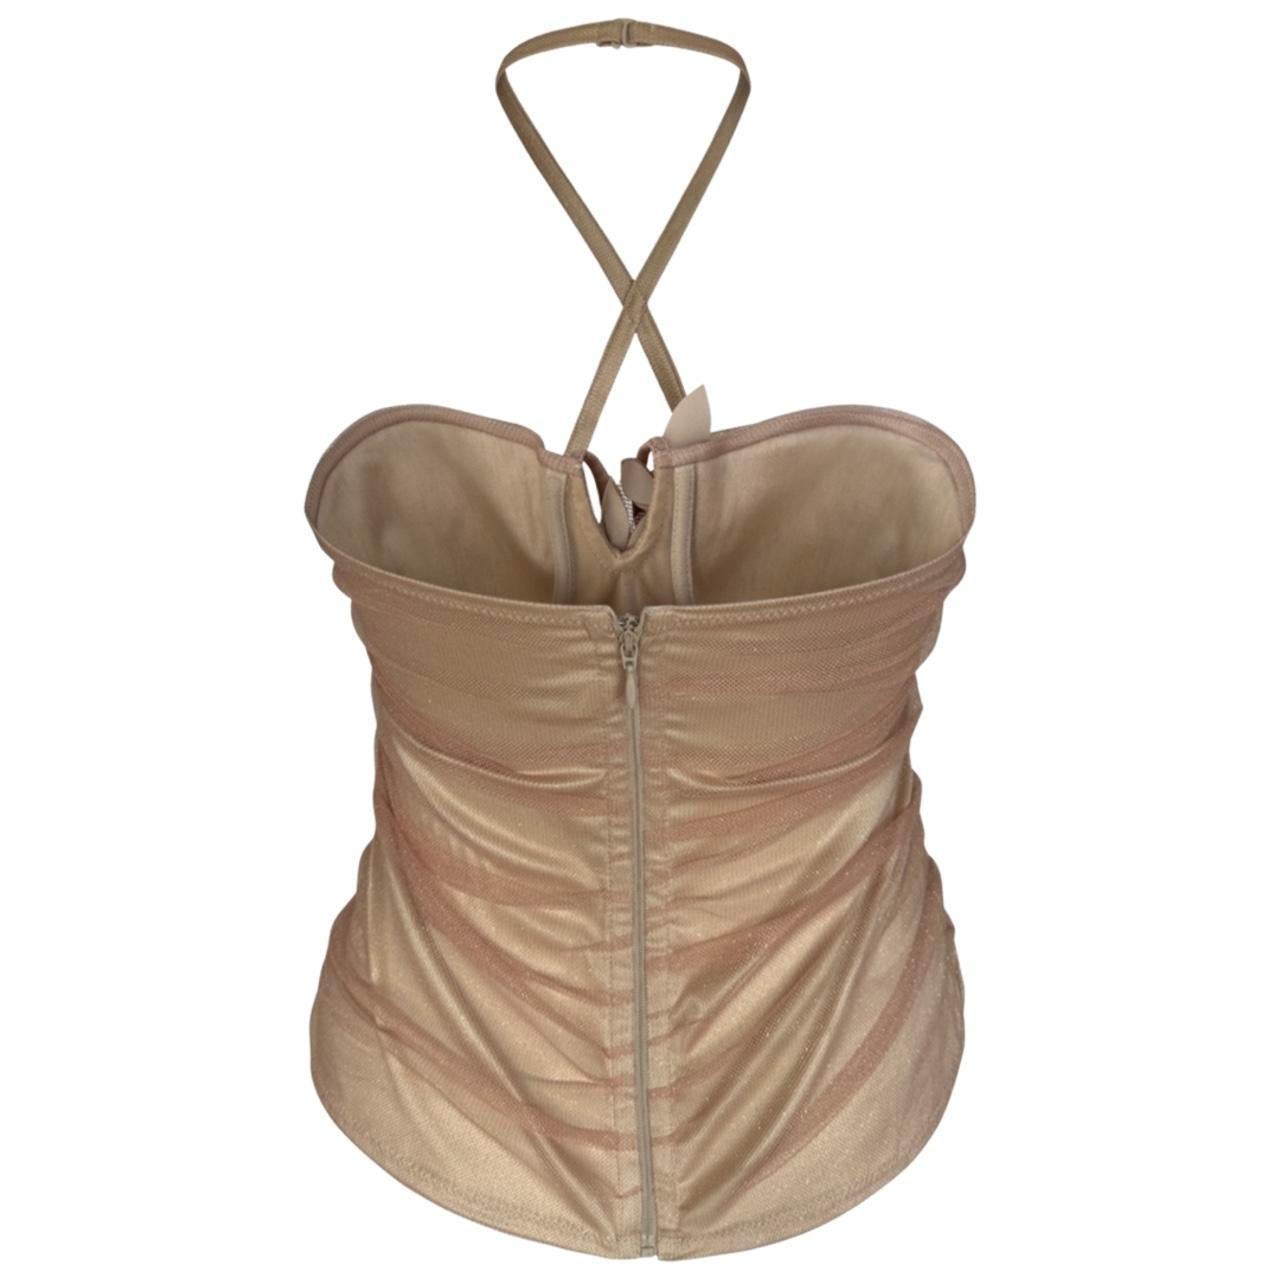 ✨ Vintage La Perla halter neck corset with flowers details
✨Pristine conditions
✨Size IT3 , fits S or size 8 UK - Cup 36 B